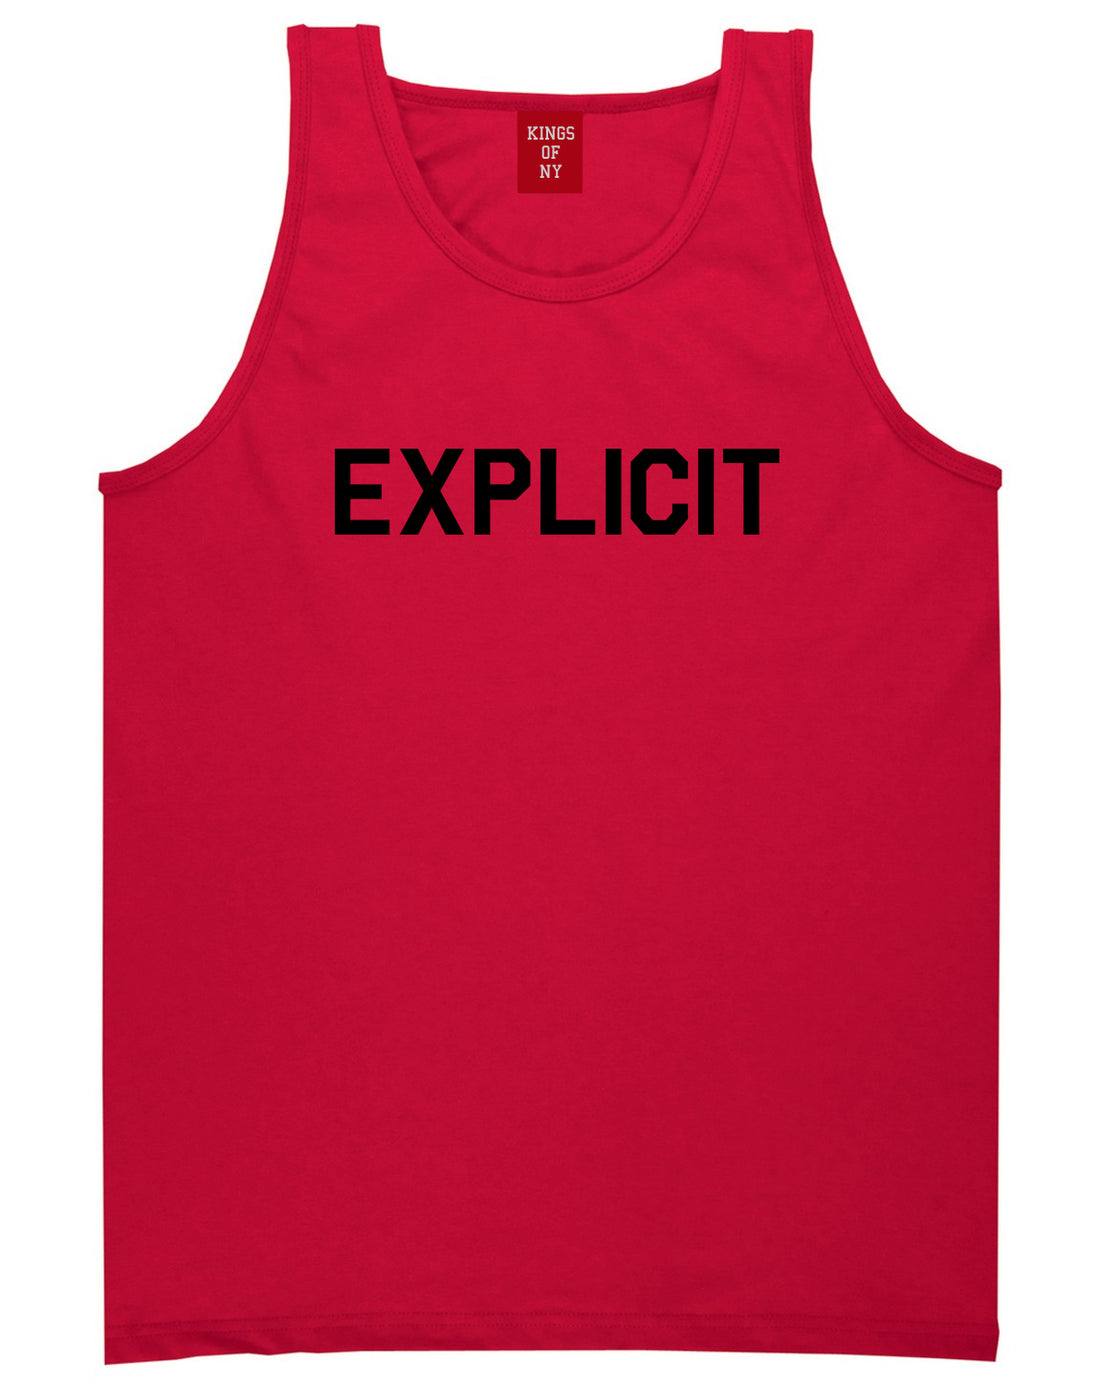 Explicit Mens Tank Top Shirt Red by Kings Of NY